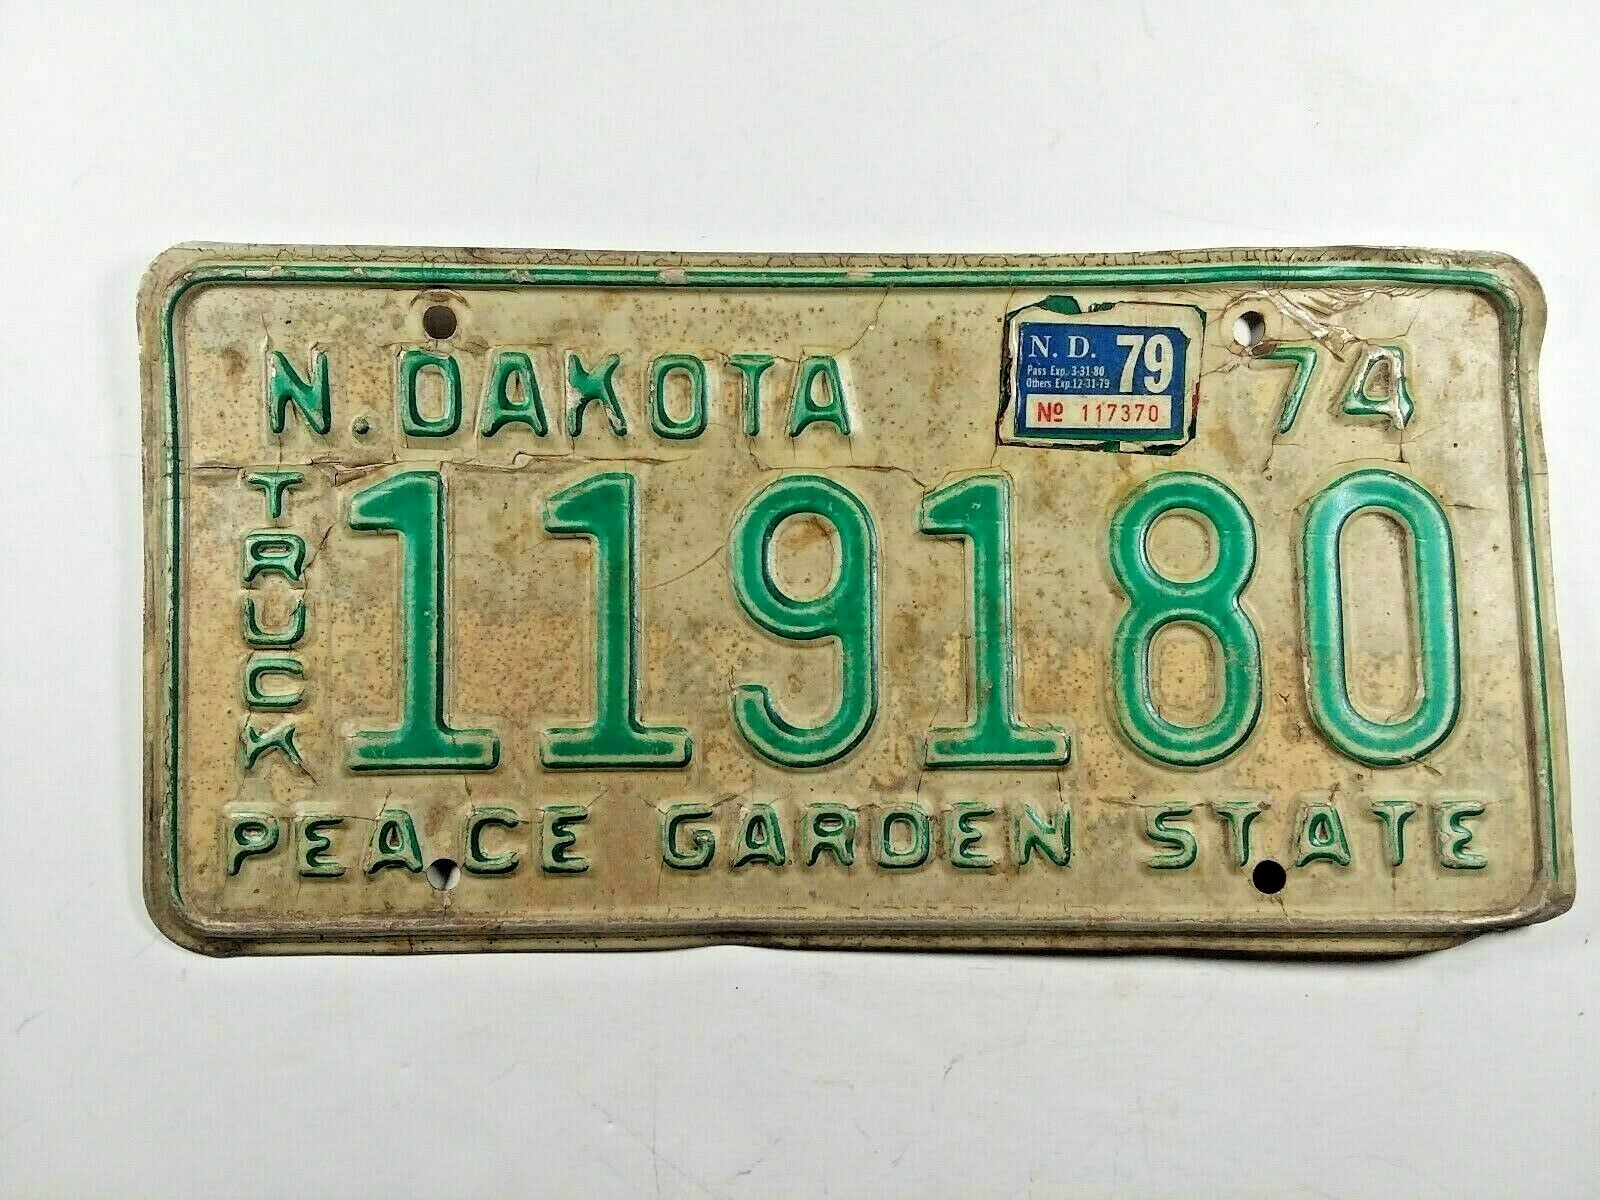 1974 North Dakota Nd Truck License Plate 119180, Peace Garden State, Green White